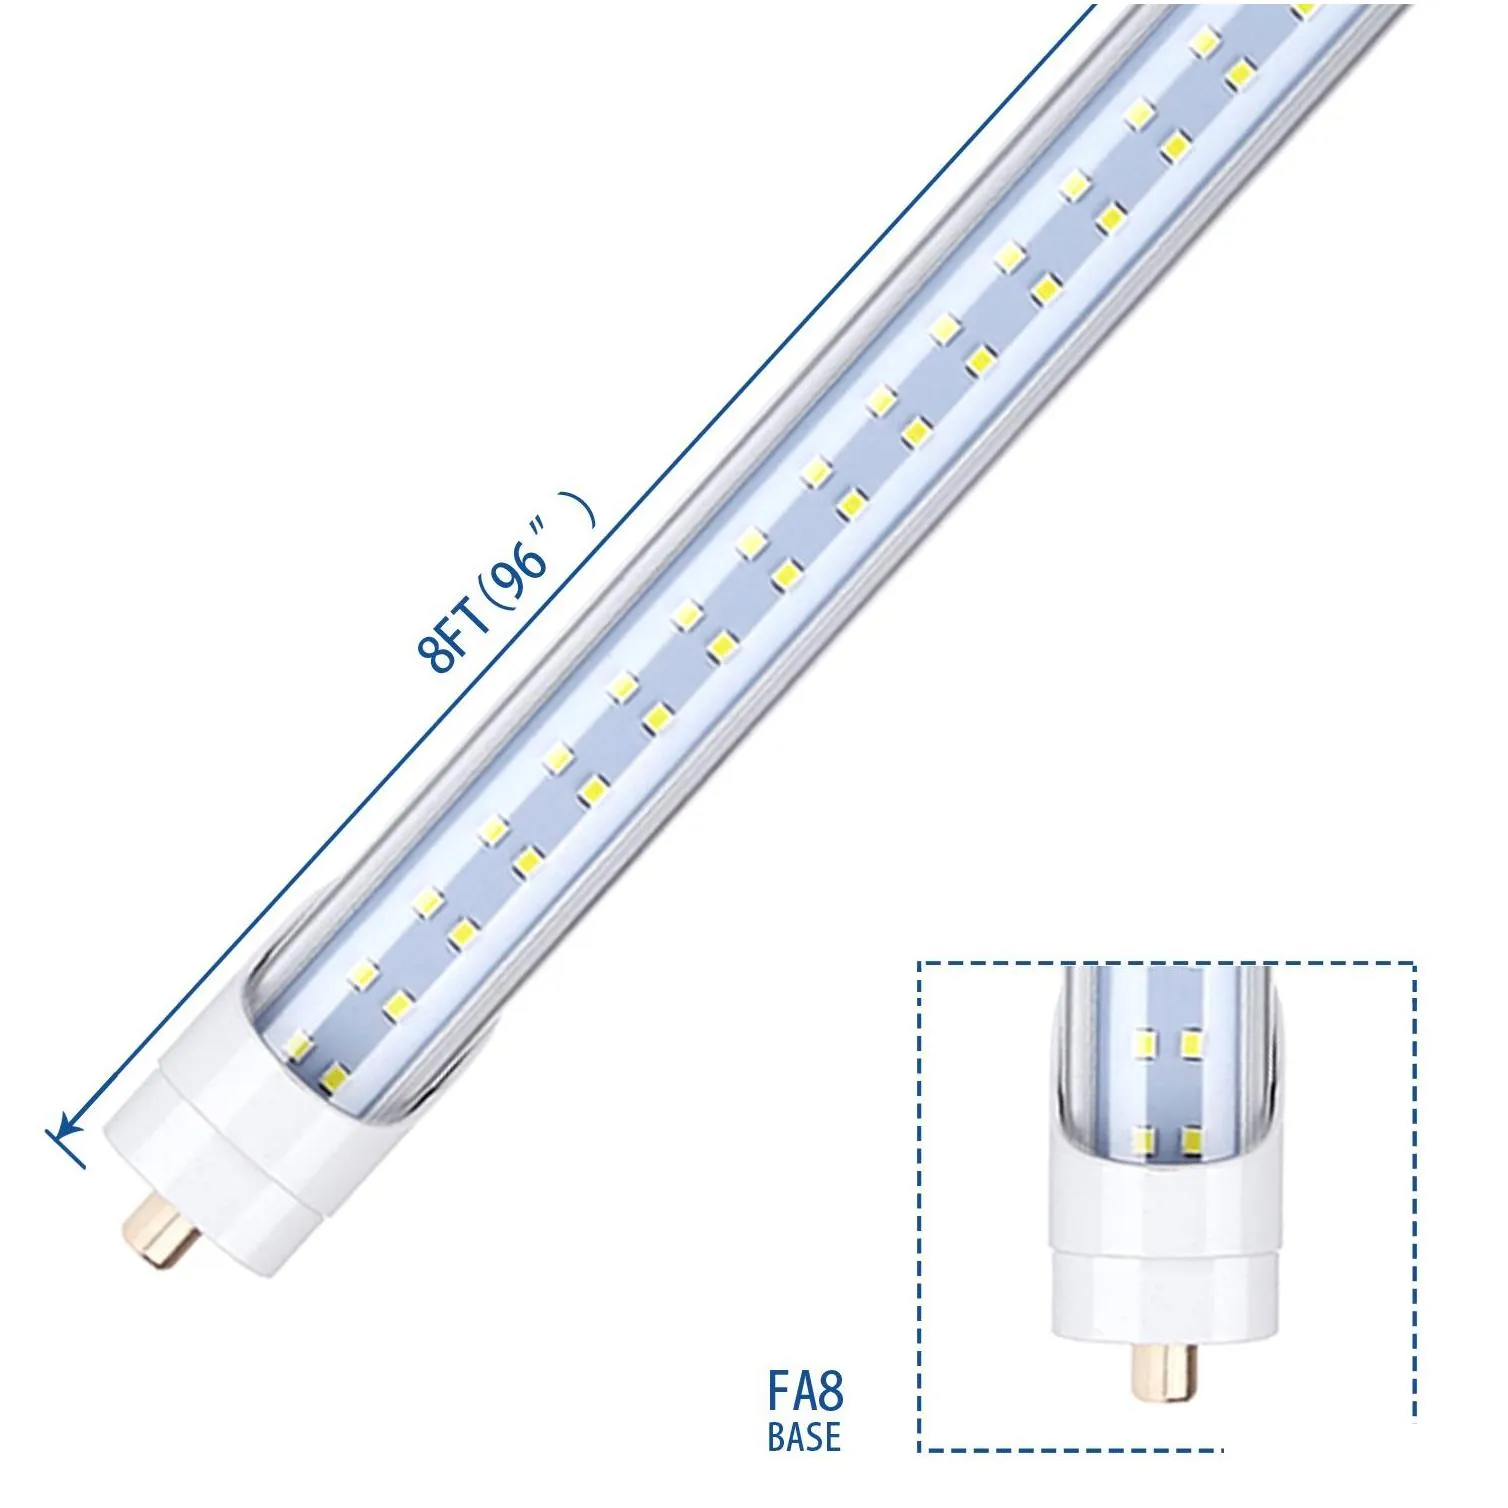 8 foot led lights f96t12 8ft led bulbs fluorescent replacement t8 t10 t12 96 45watt fa8 single pin led shop lights